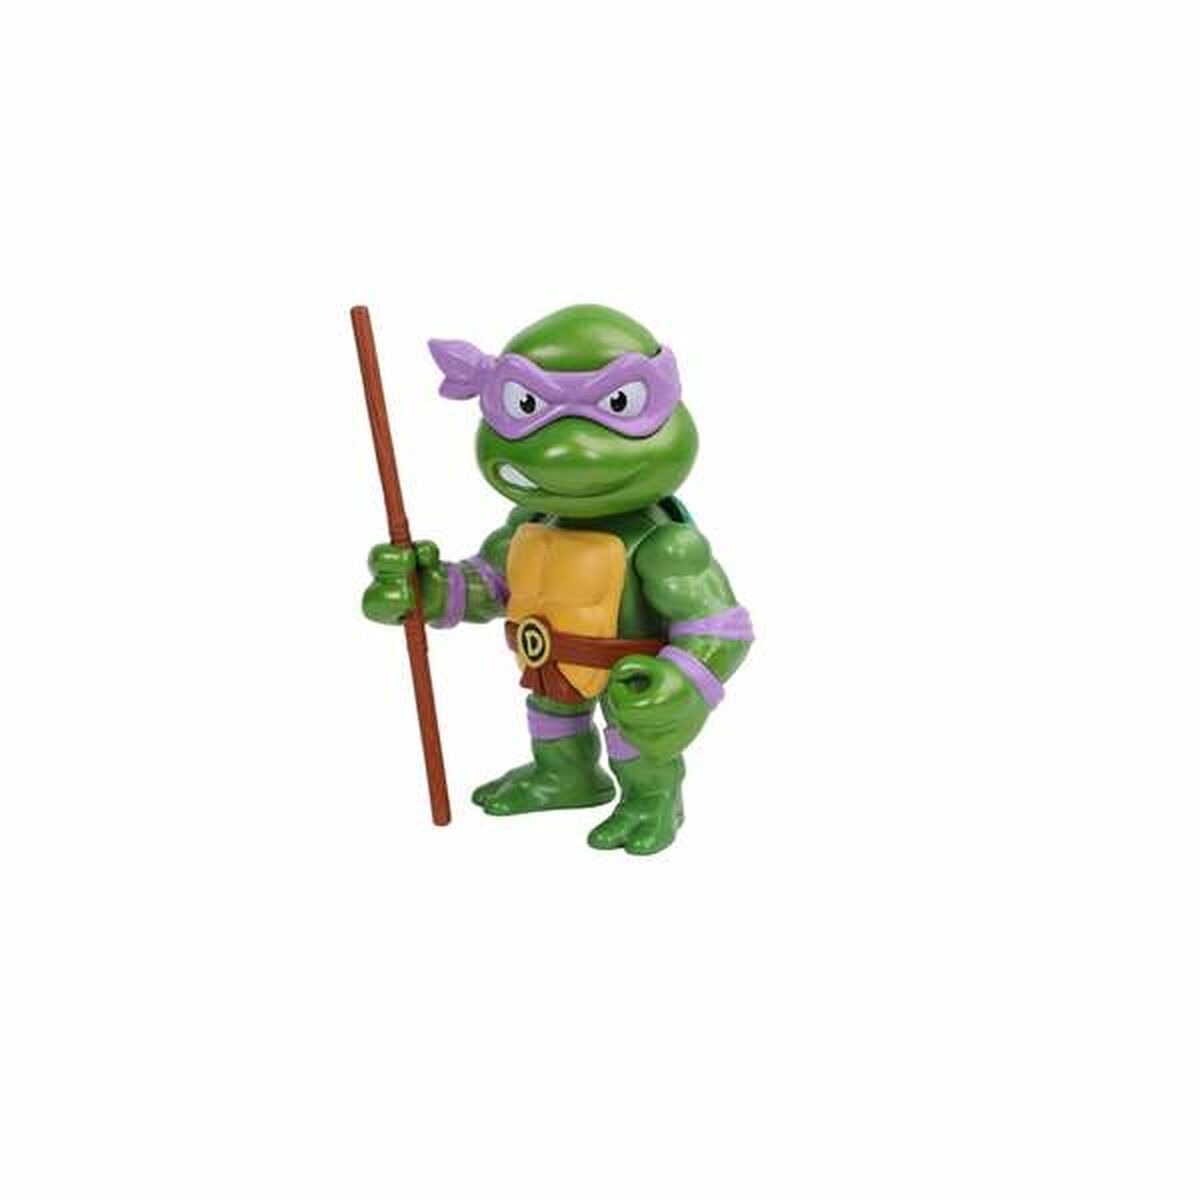 Costume de Teenage Mutant Ninja Turtles Donatello pour enfant